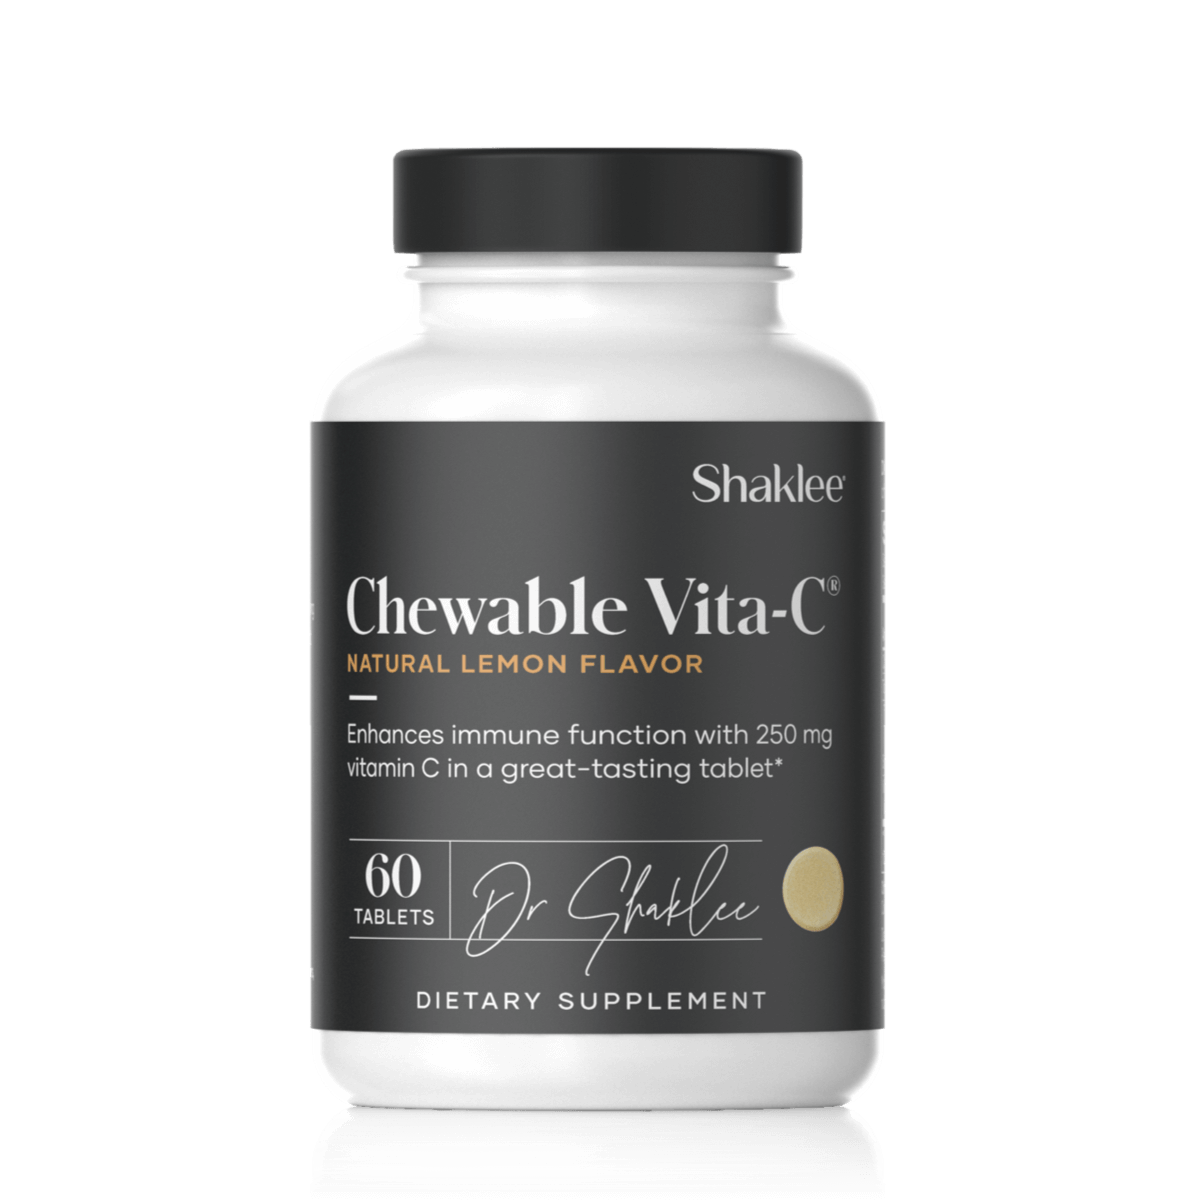 Chewable Vita-C: Vitamin C Supplement for Immune Support* | Shaklee